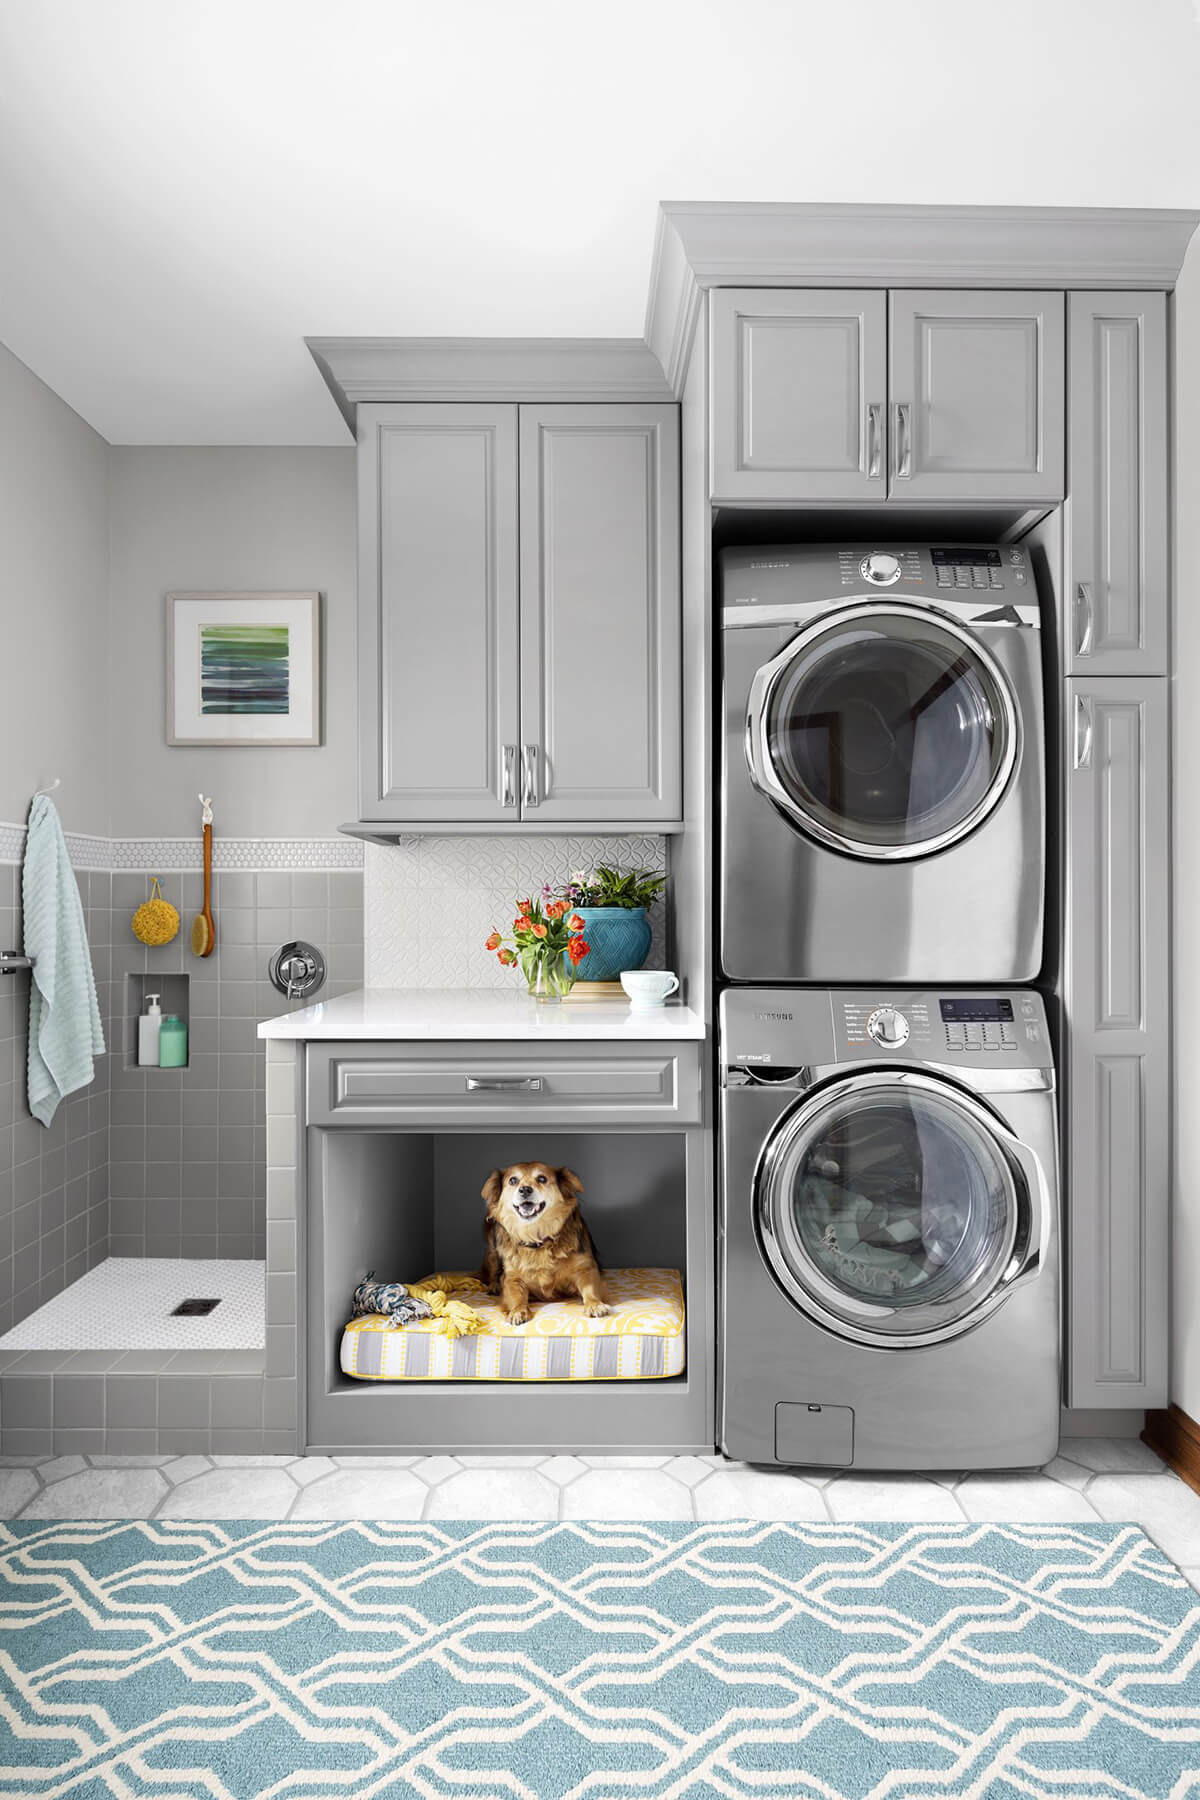 Best ideas about Laundry Room Design Ideas
. Save or Pin 28 Best Small Laundry Room Design Ideas for 2019 Now.